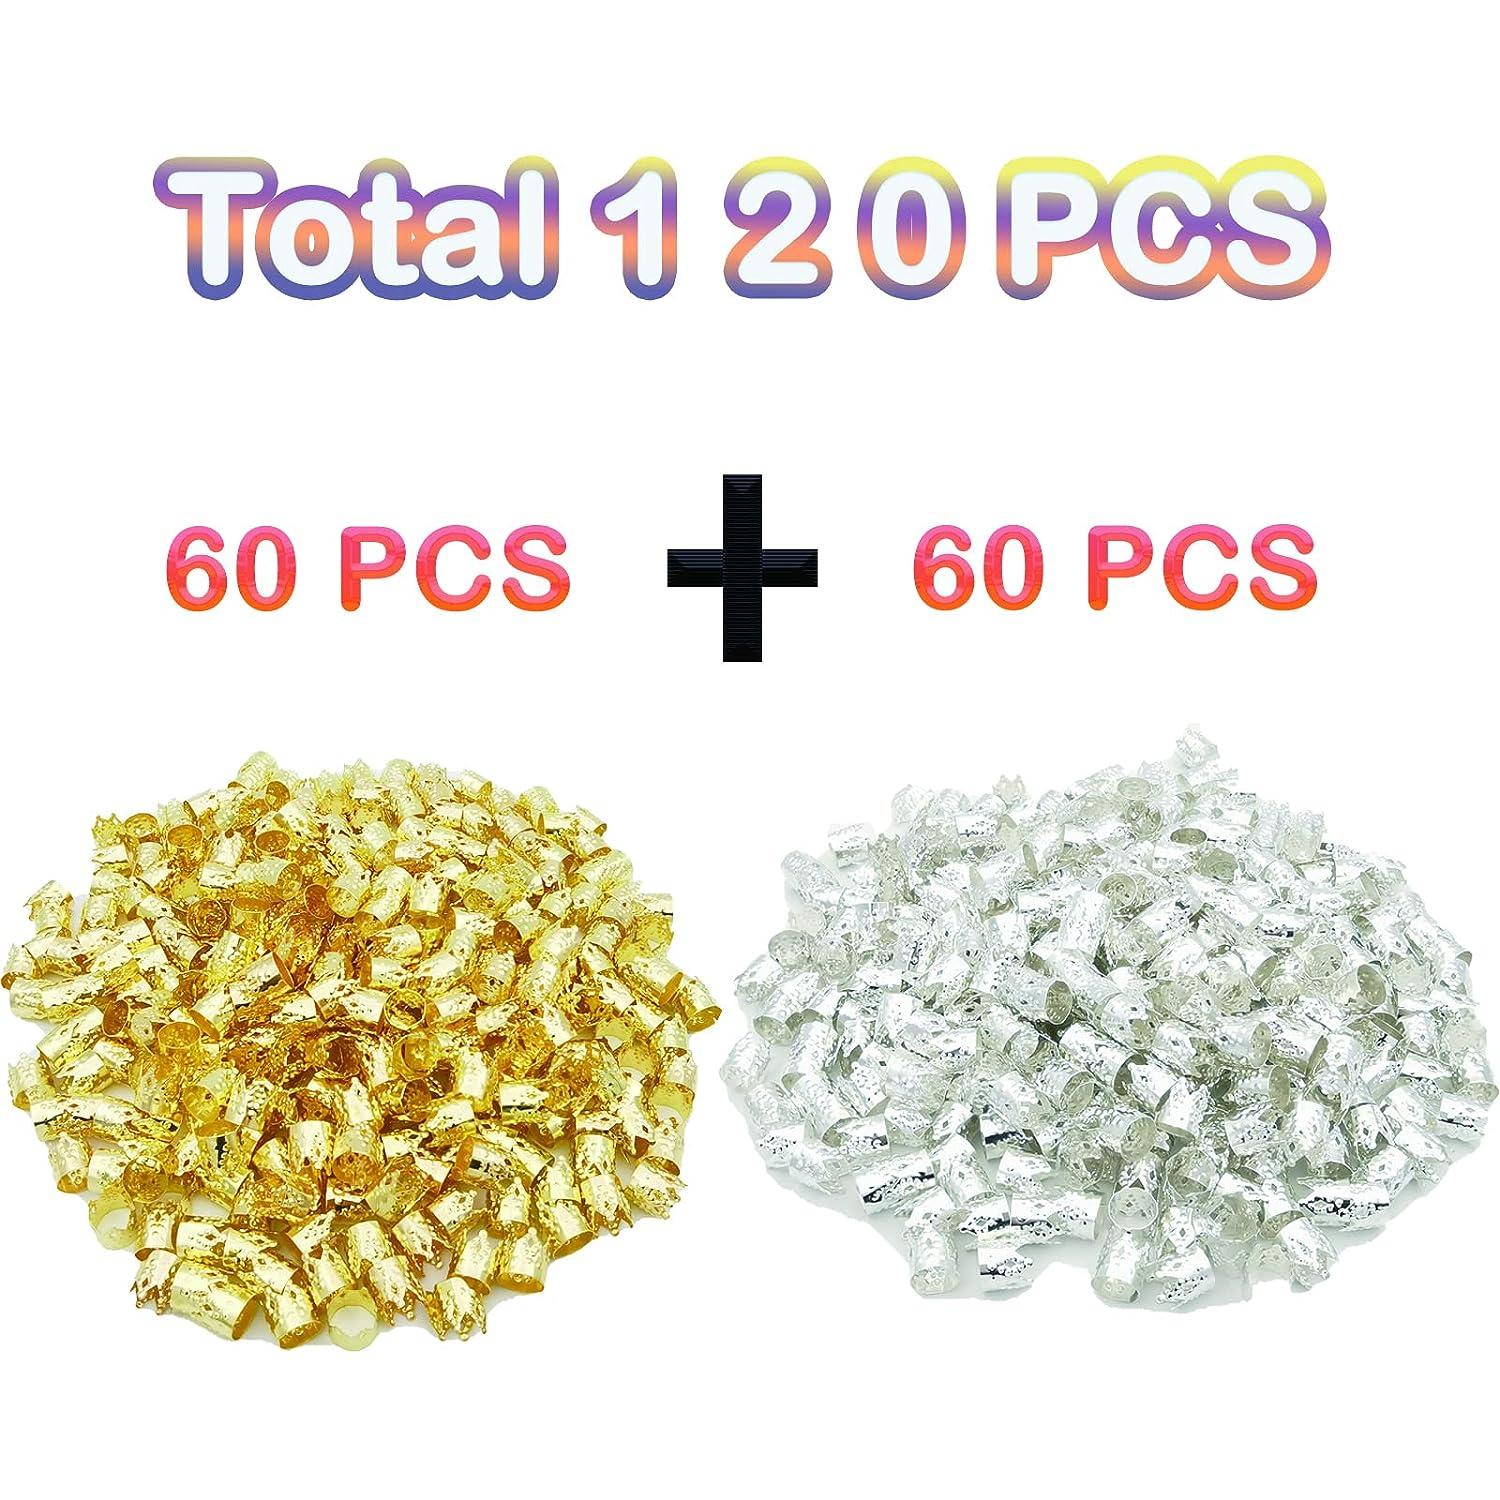 60-120pcs Dreadlocks Beads Metal Golden And Silver Hair Rings